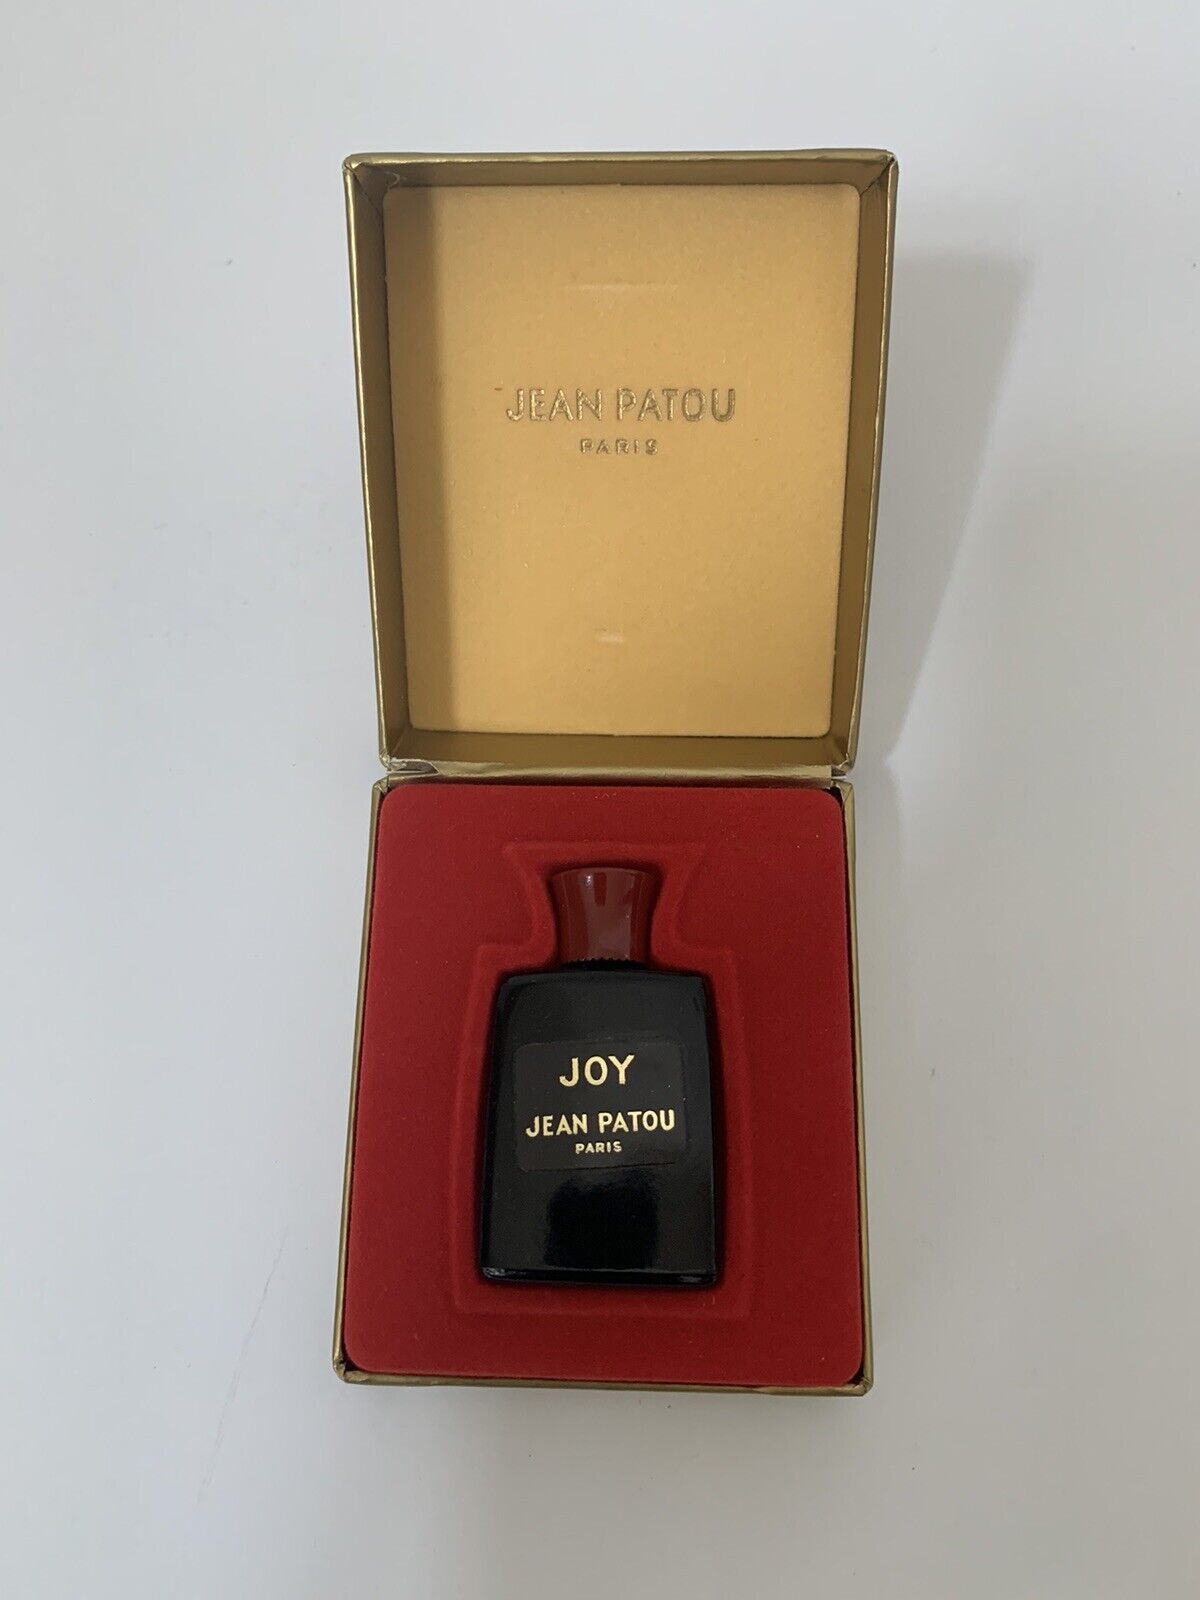 Vintage JOY PARFUM Pure PERFUME by JEAN PATOU - Paris  Rare Perfume